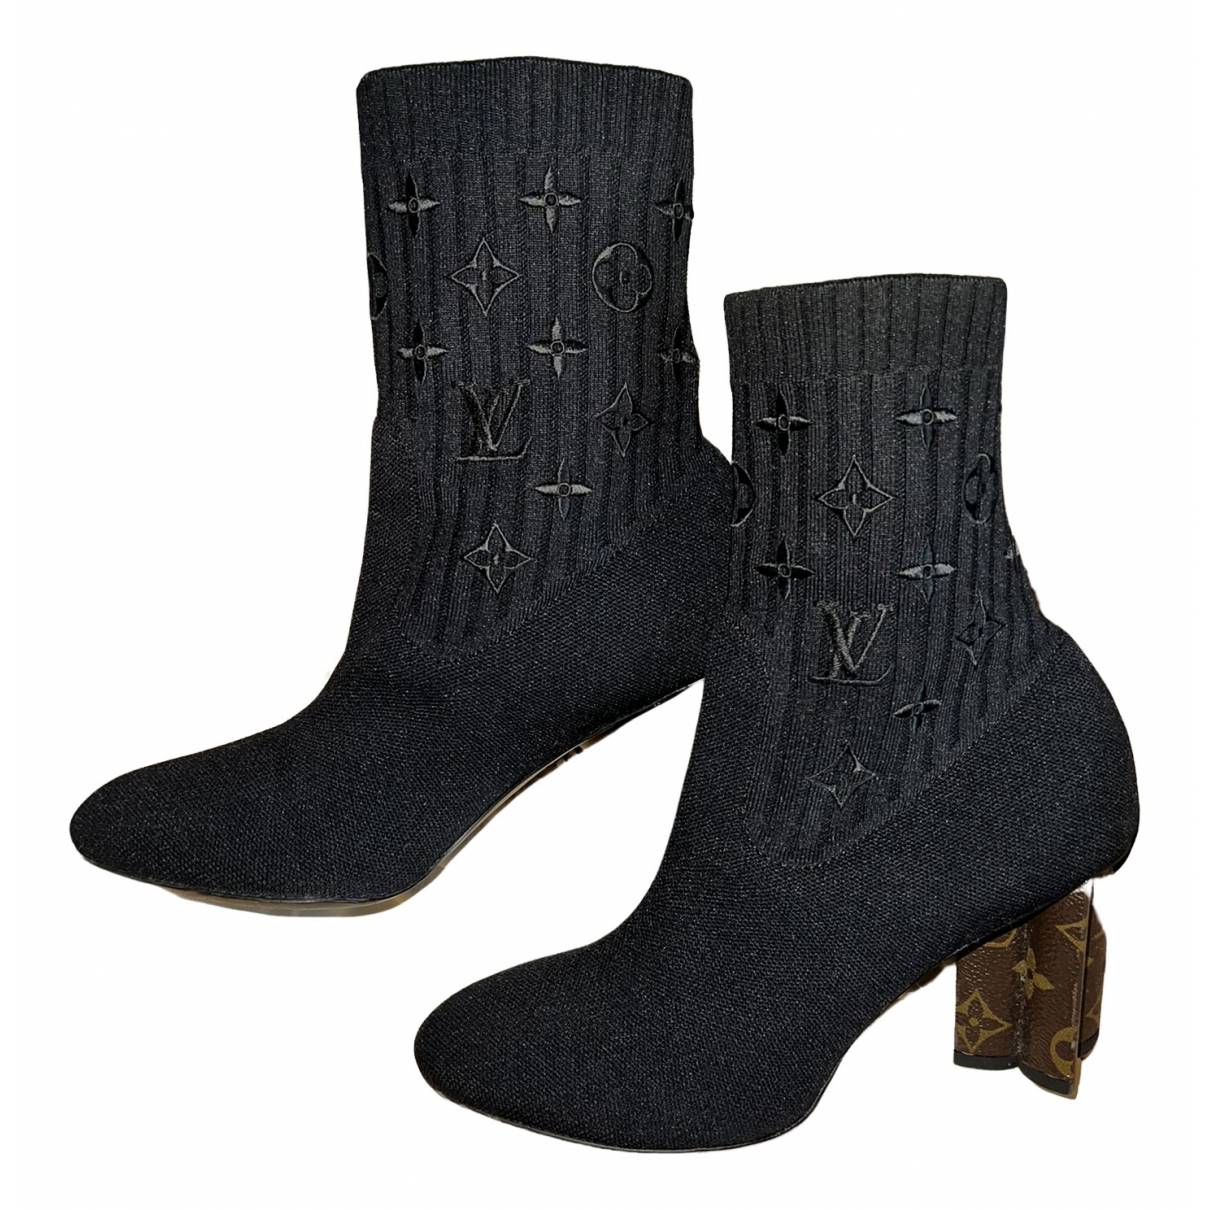 Silhouette cloth ankle boots Louis Vuitton Black size 38.5 EU in